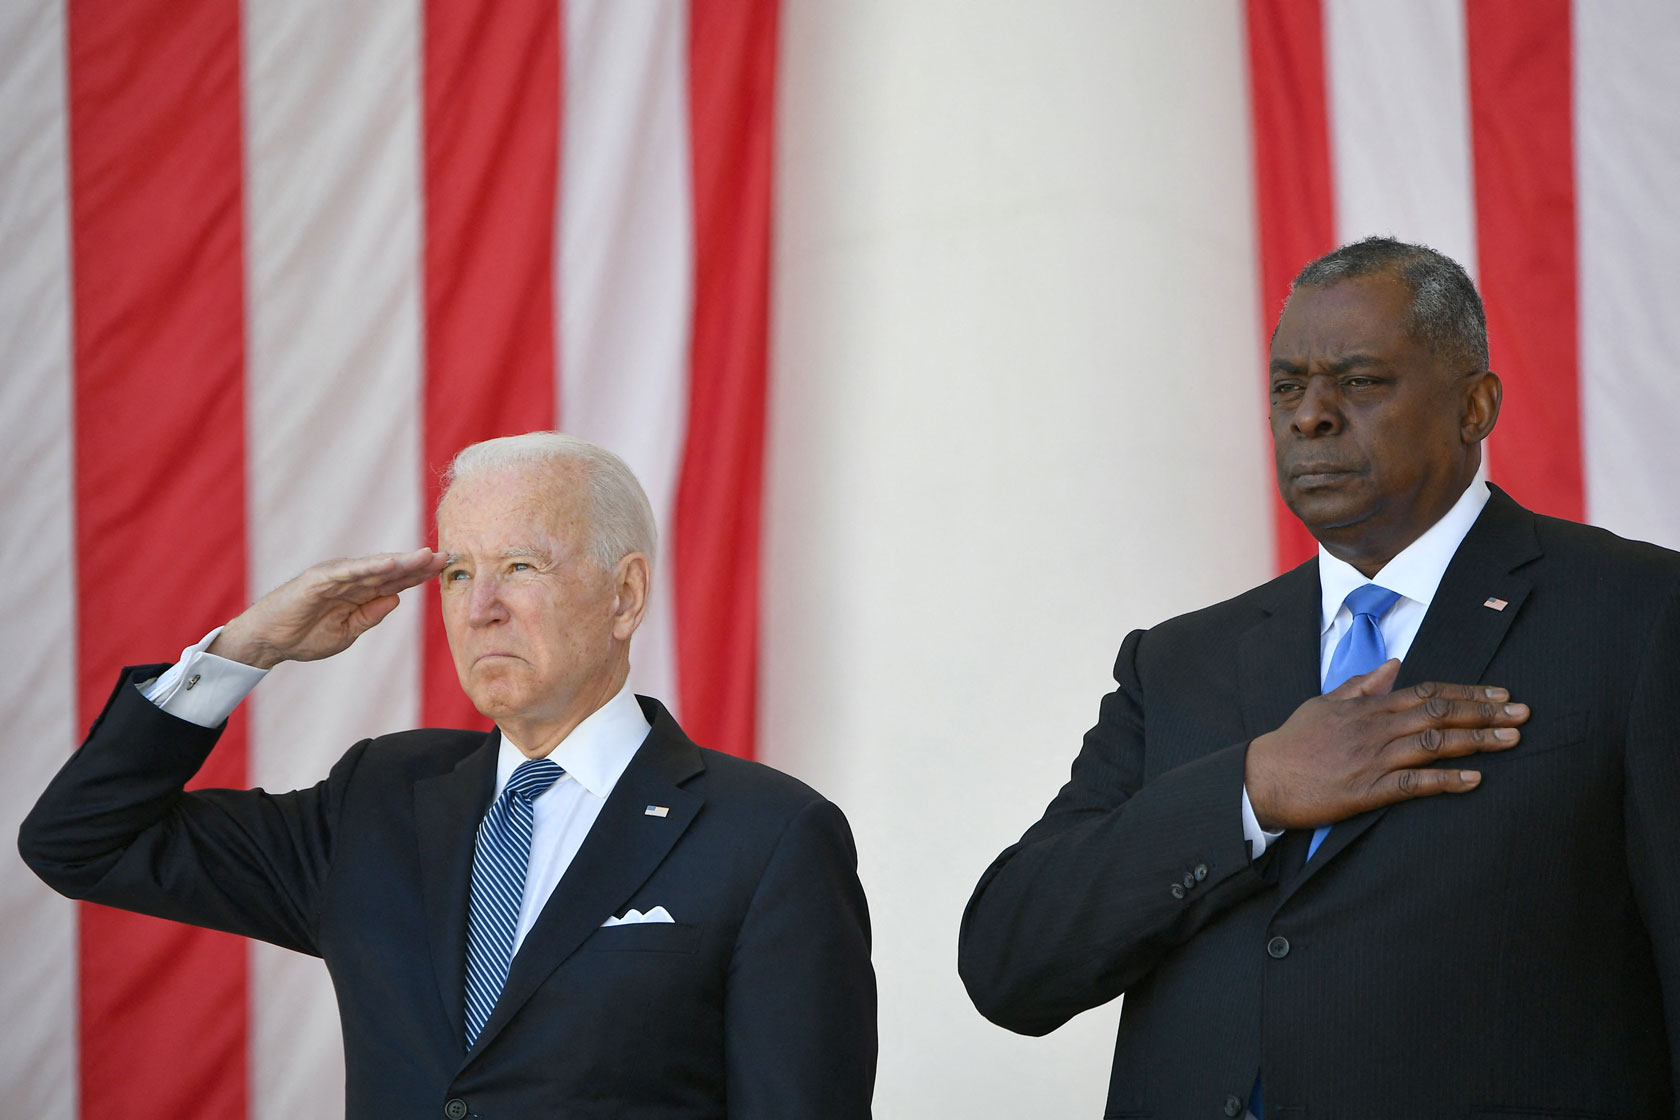 President Joe Biden salutes alongside Secretary of Defense Lloyd Austin before delivering an address at Arlington National Cemetery.